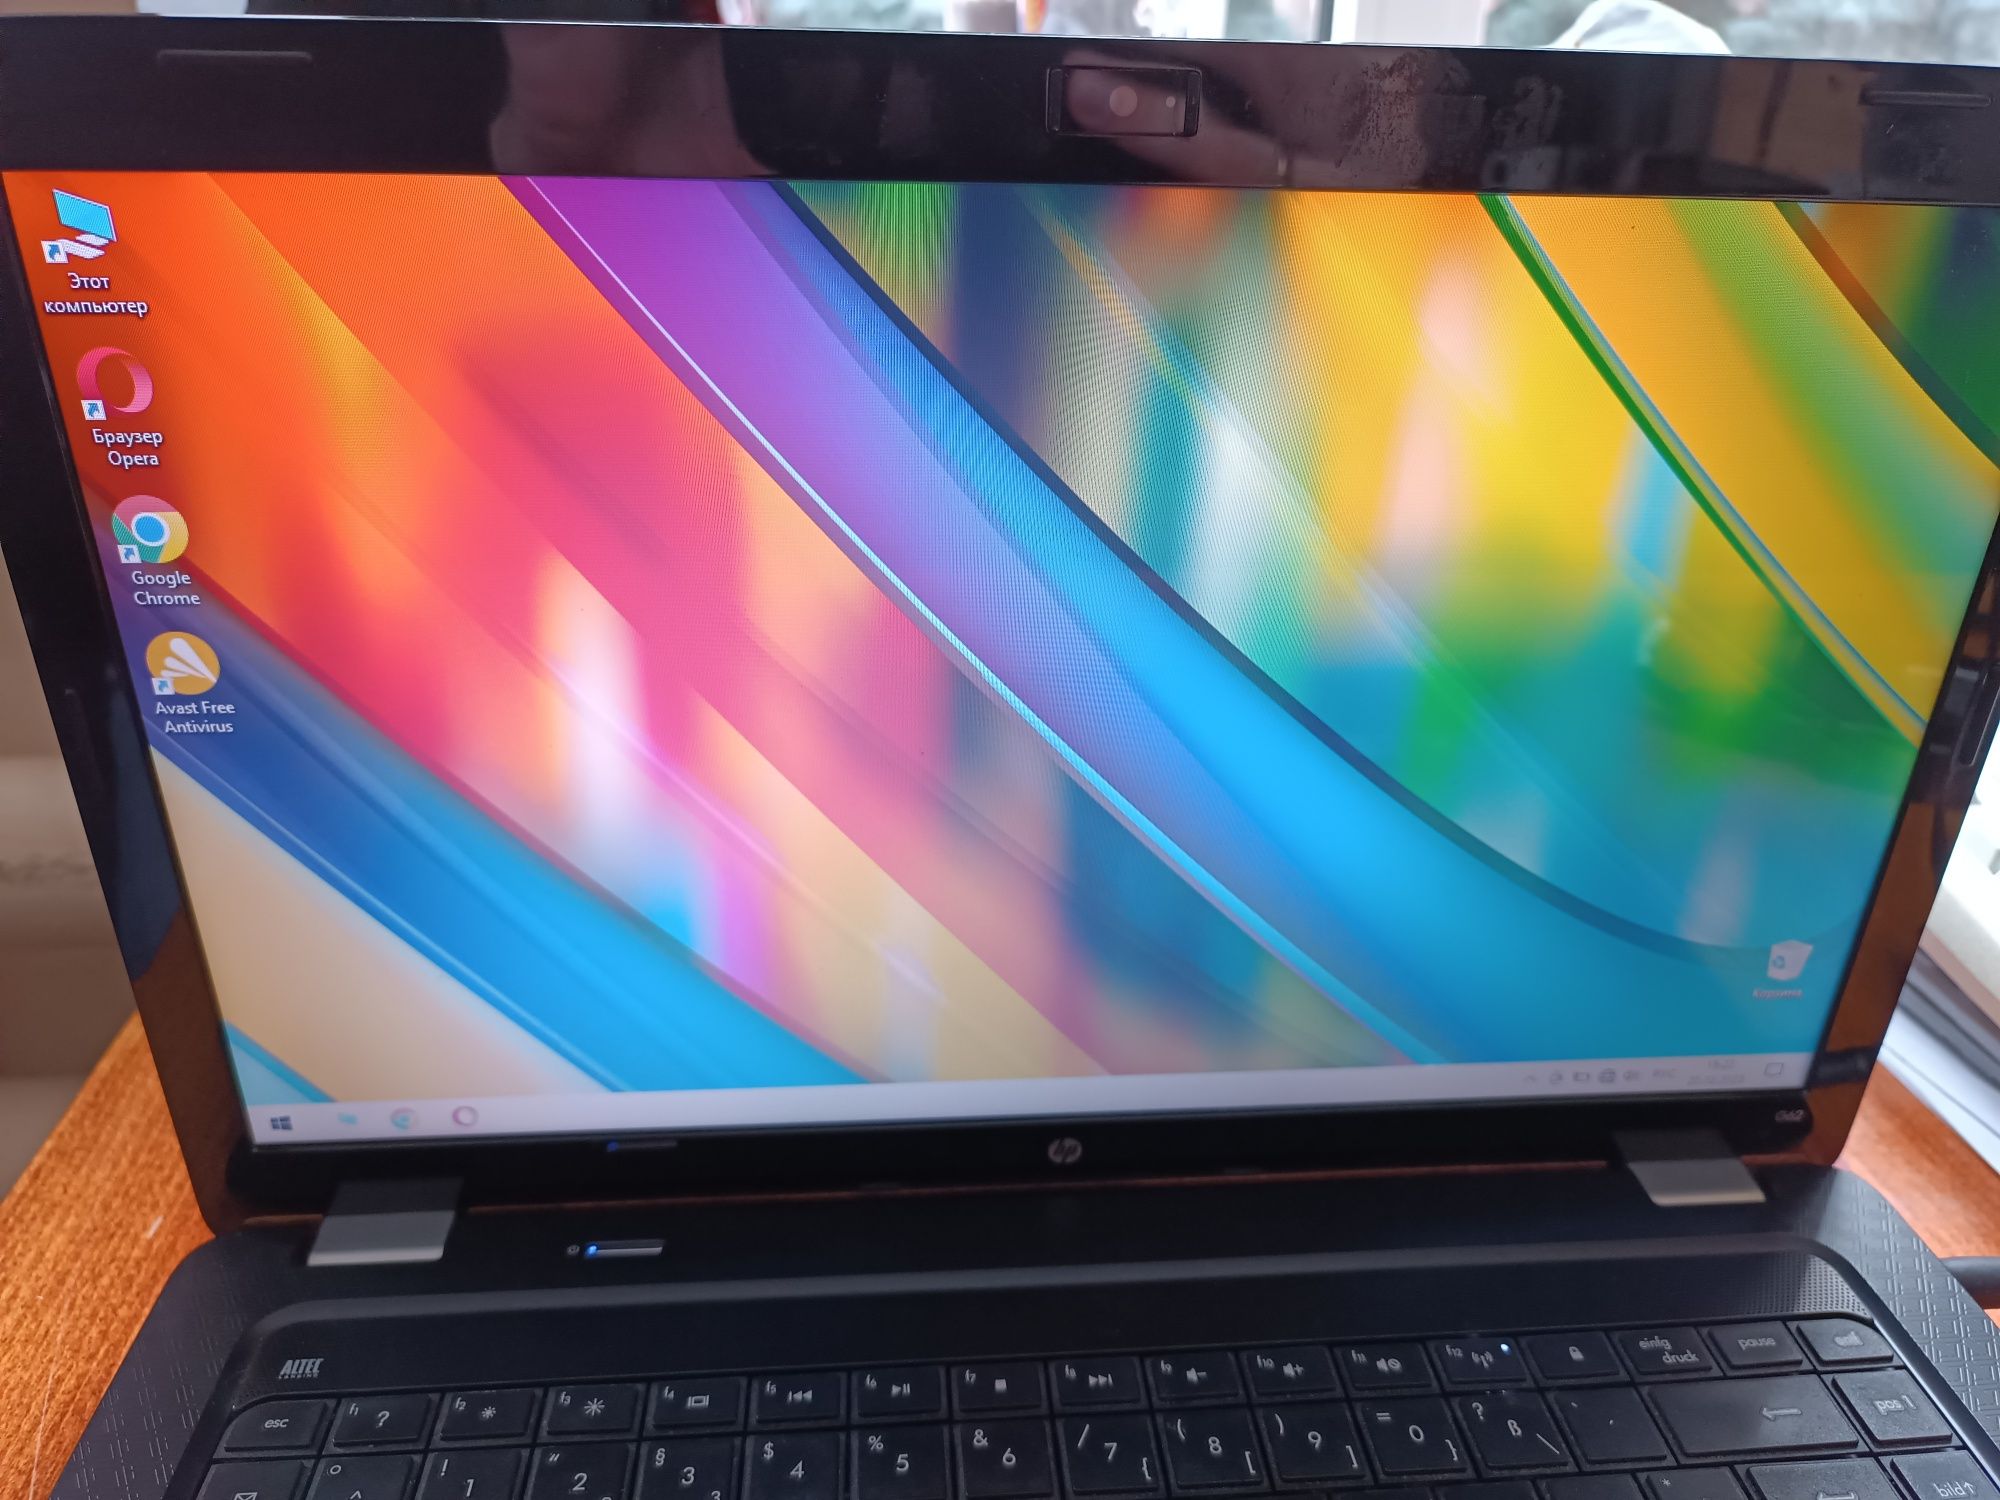 Ноутбук HP G62 официал